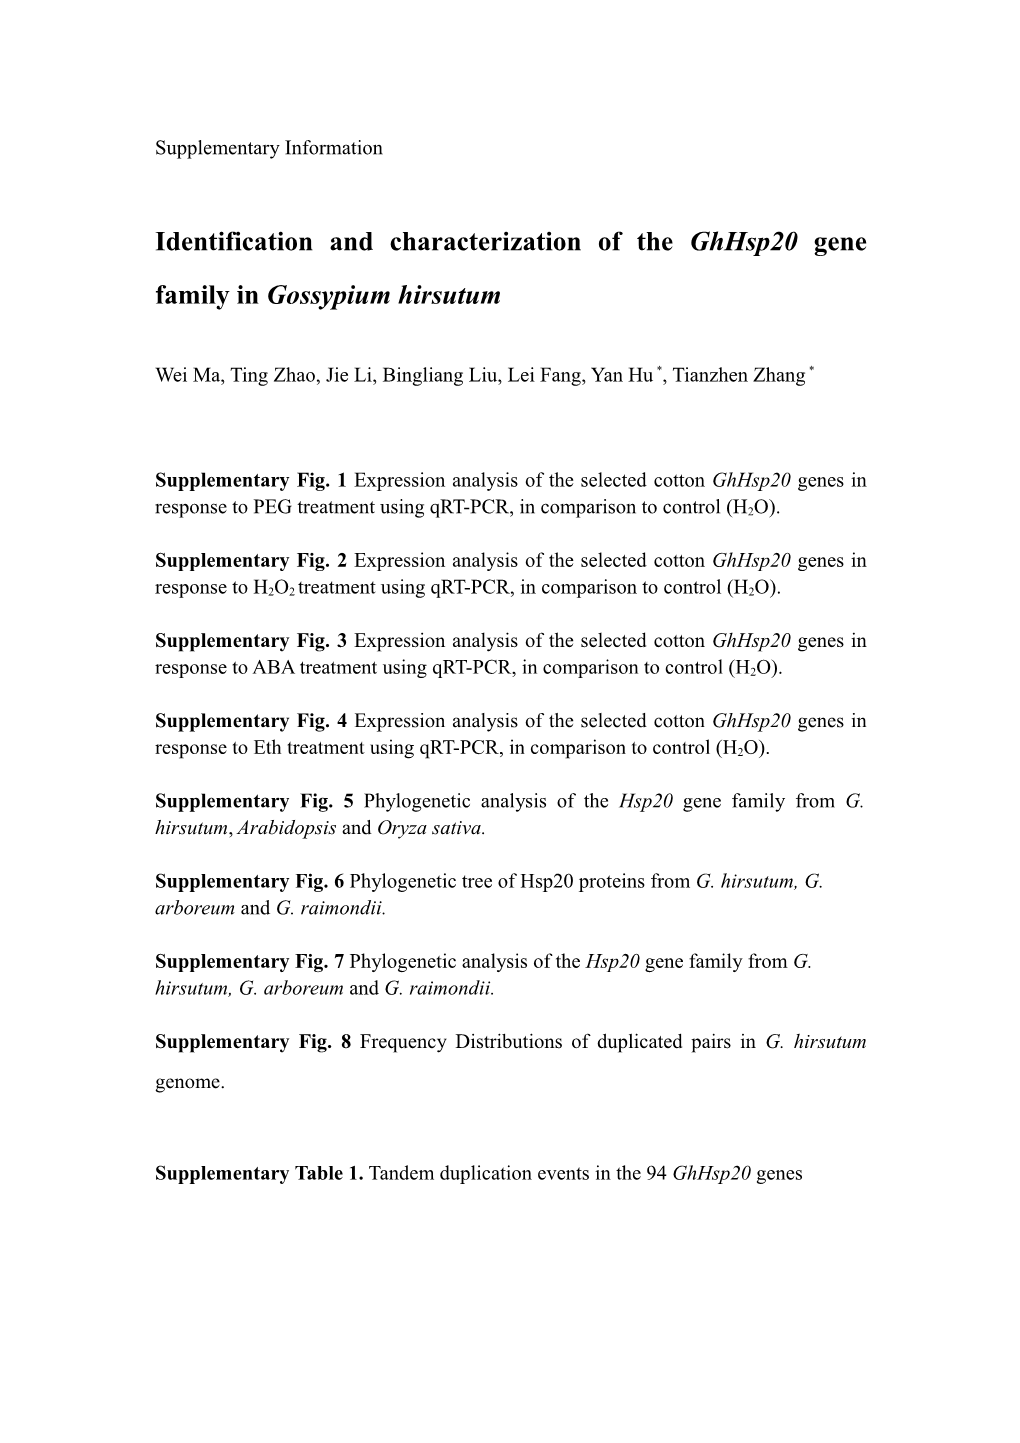 Identification and Characterization of the Ghhsp20 Gene Family in Gossypium Hirsutum